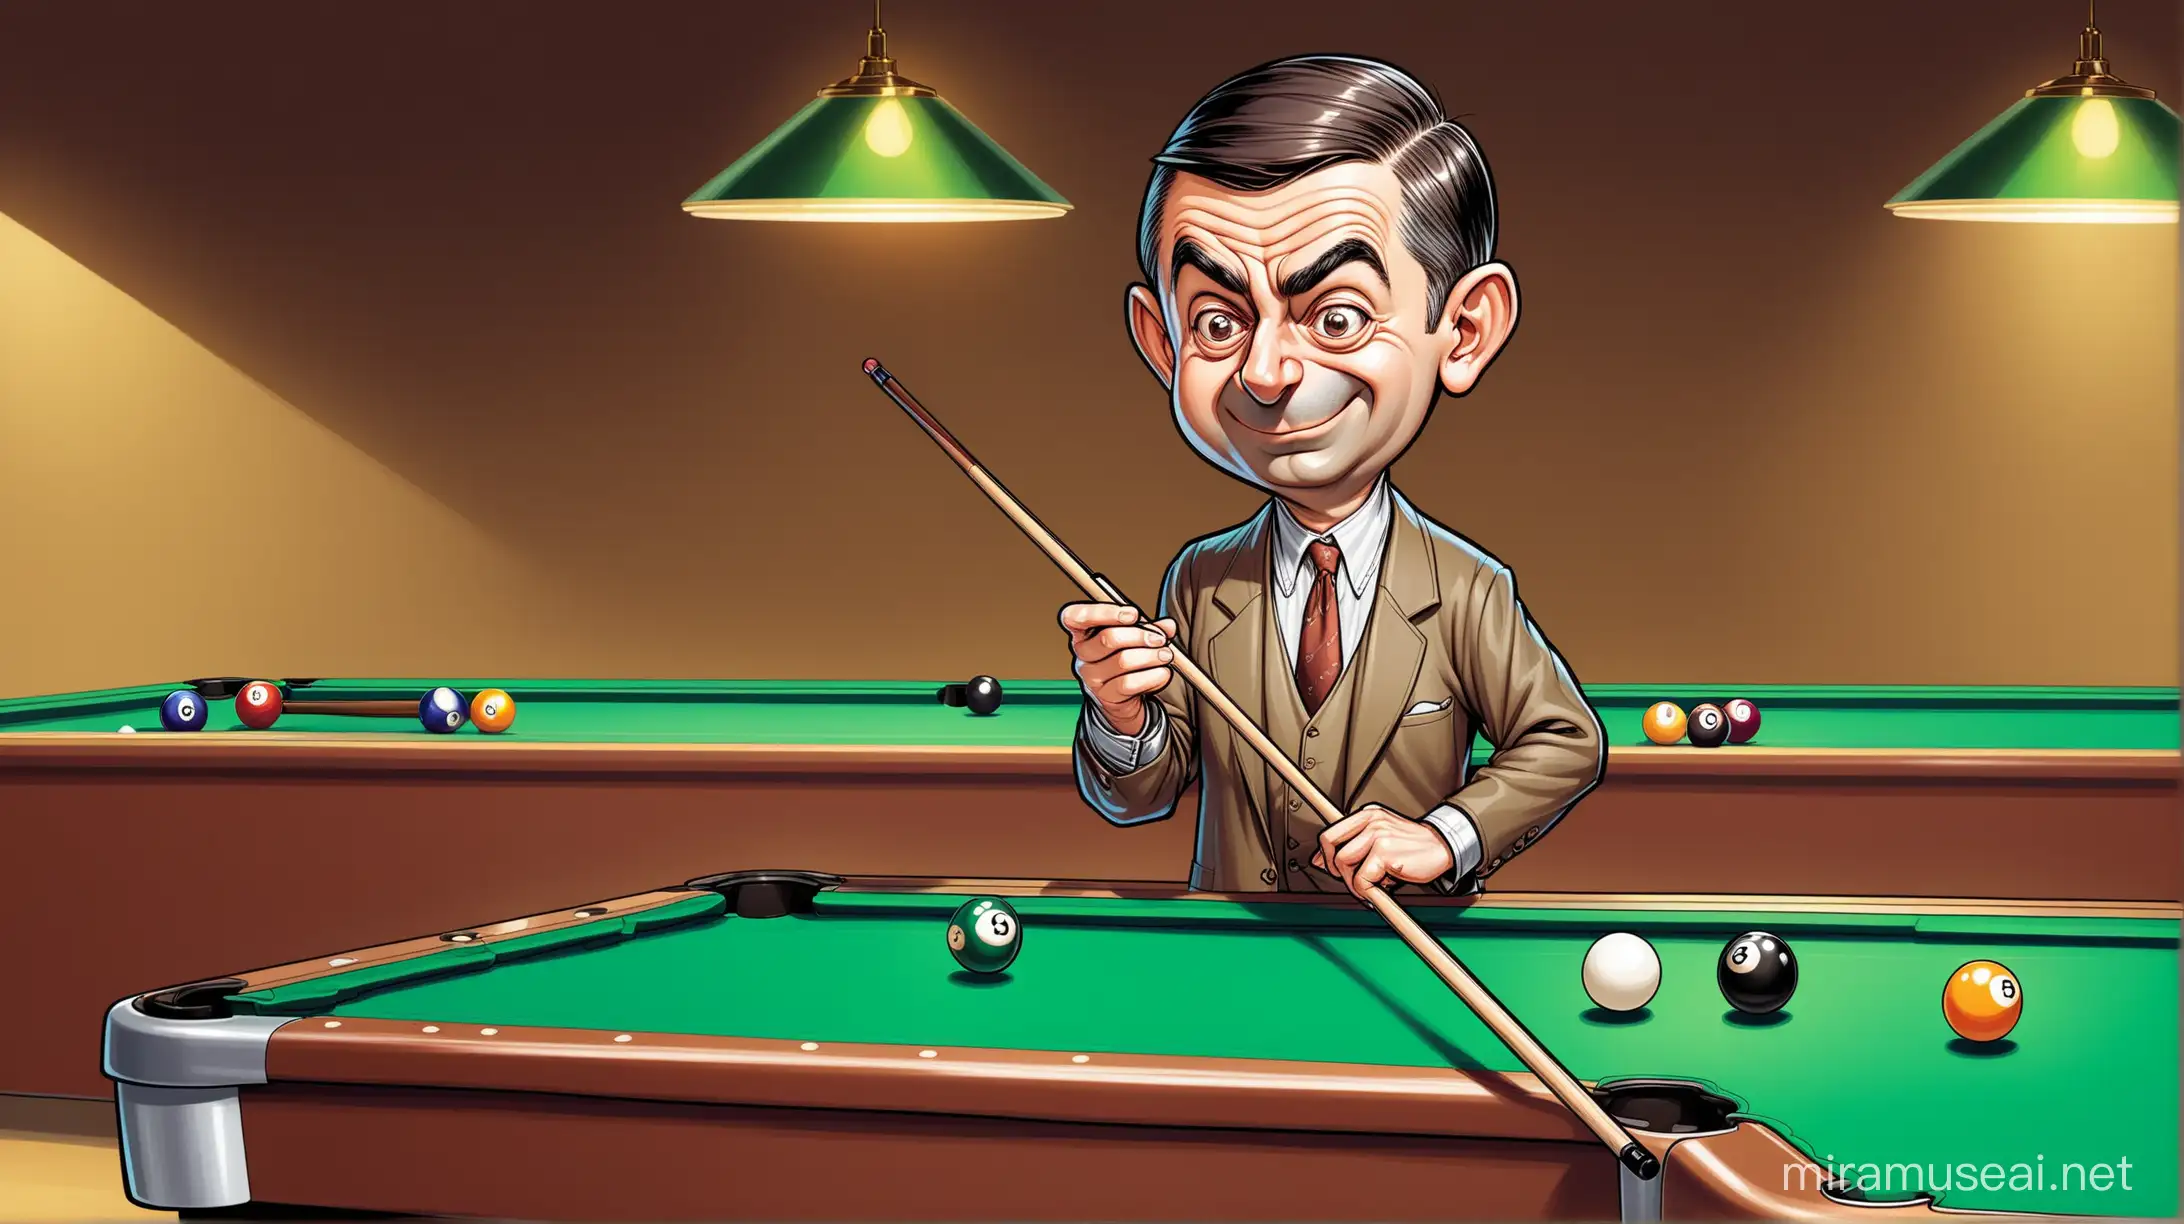 Joyful Mr Bean Playing Billiards by the Poolside